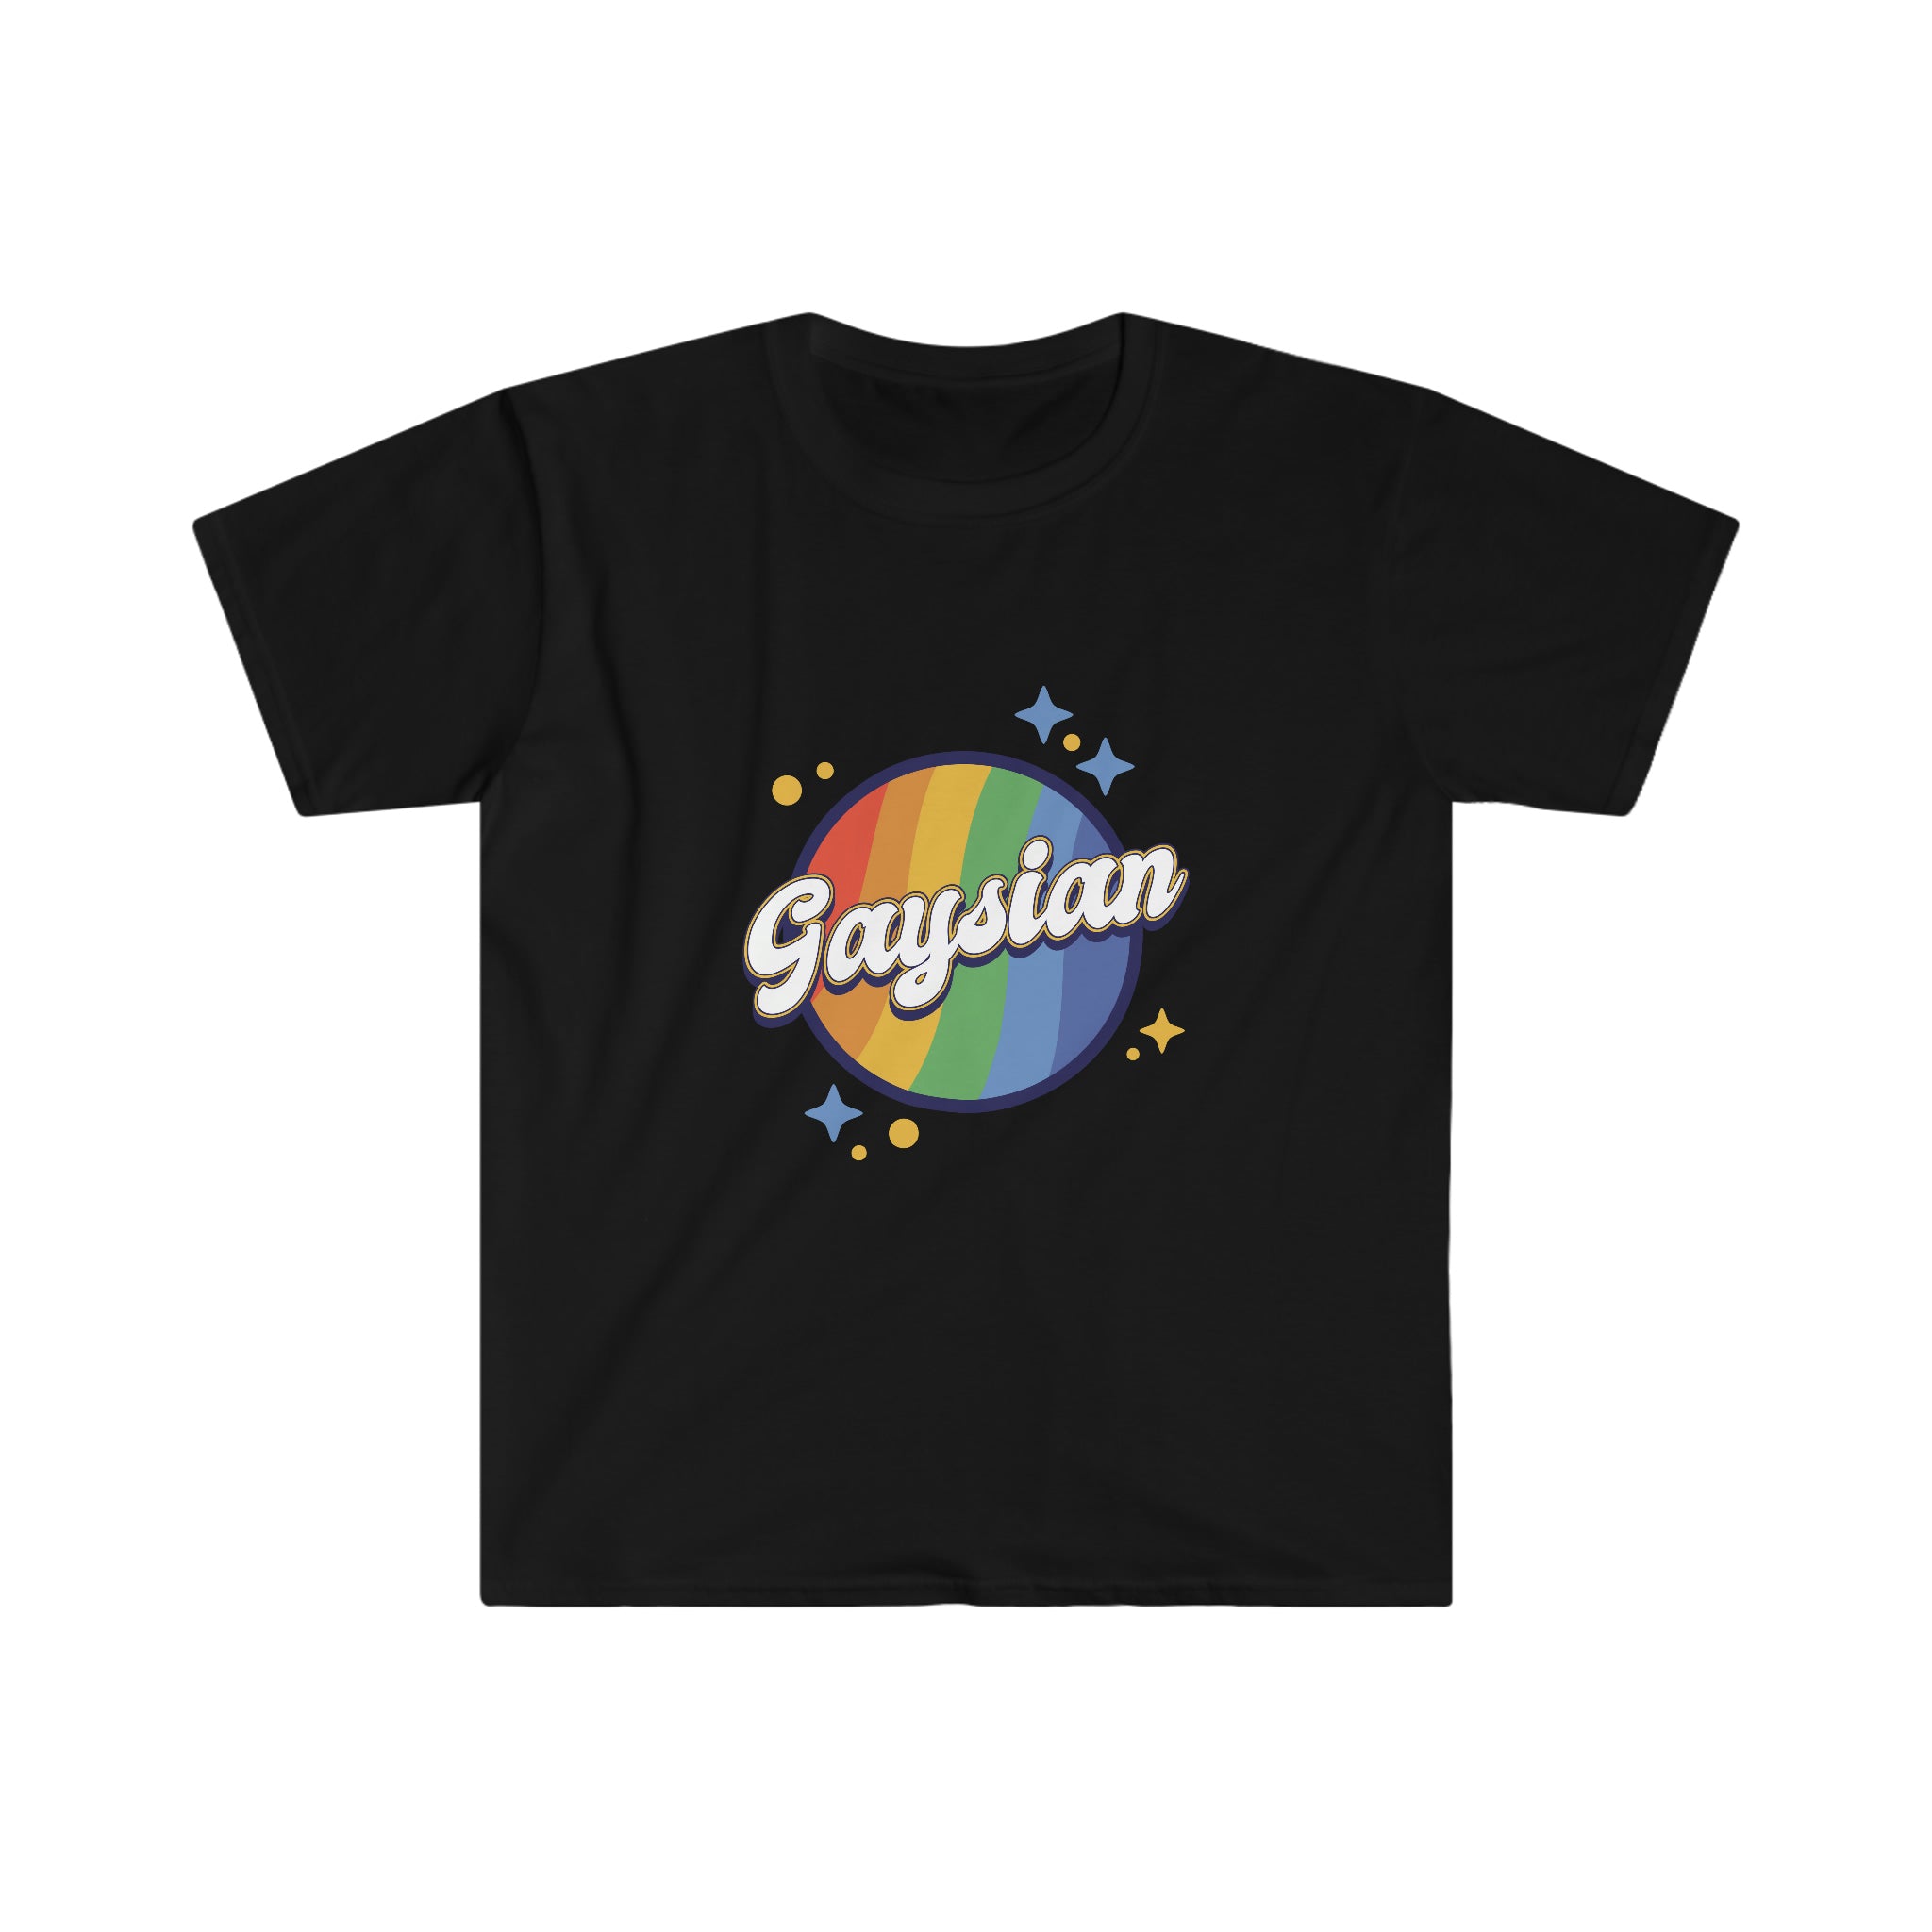 A black Gaysian T-shirt with a proud rainbow logo.